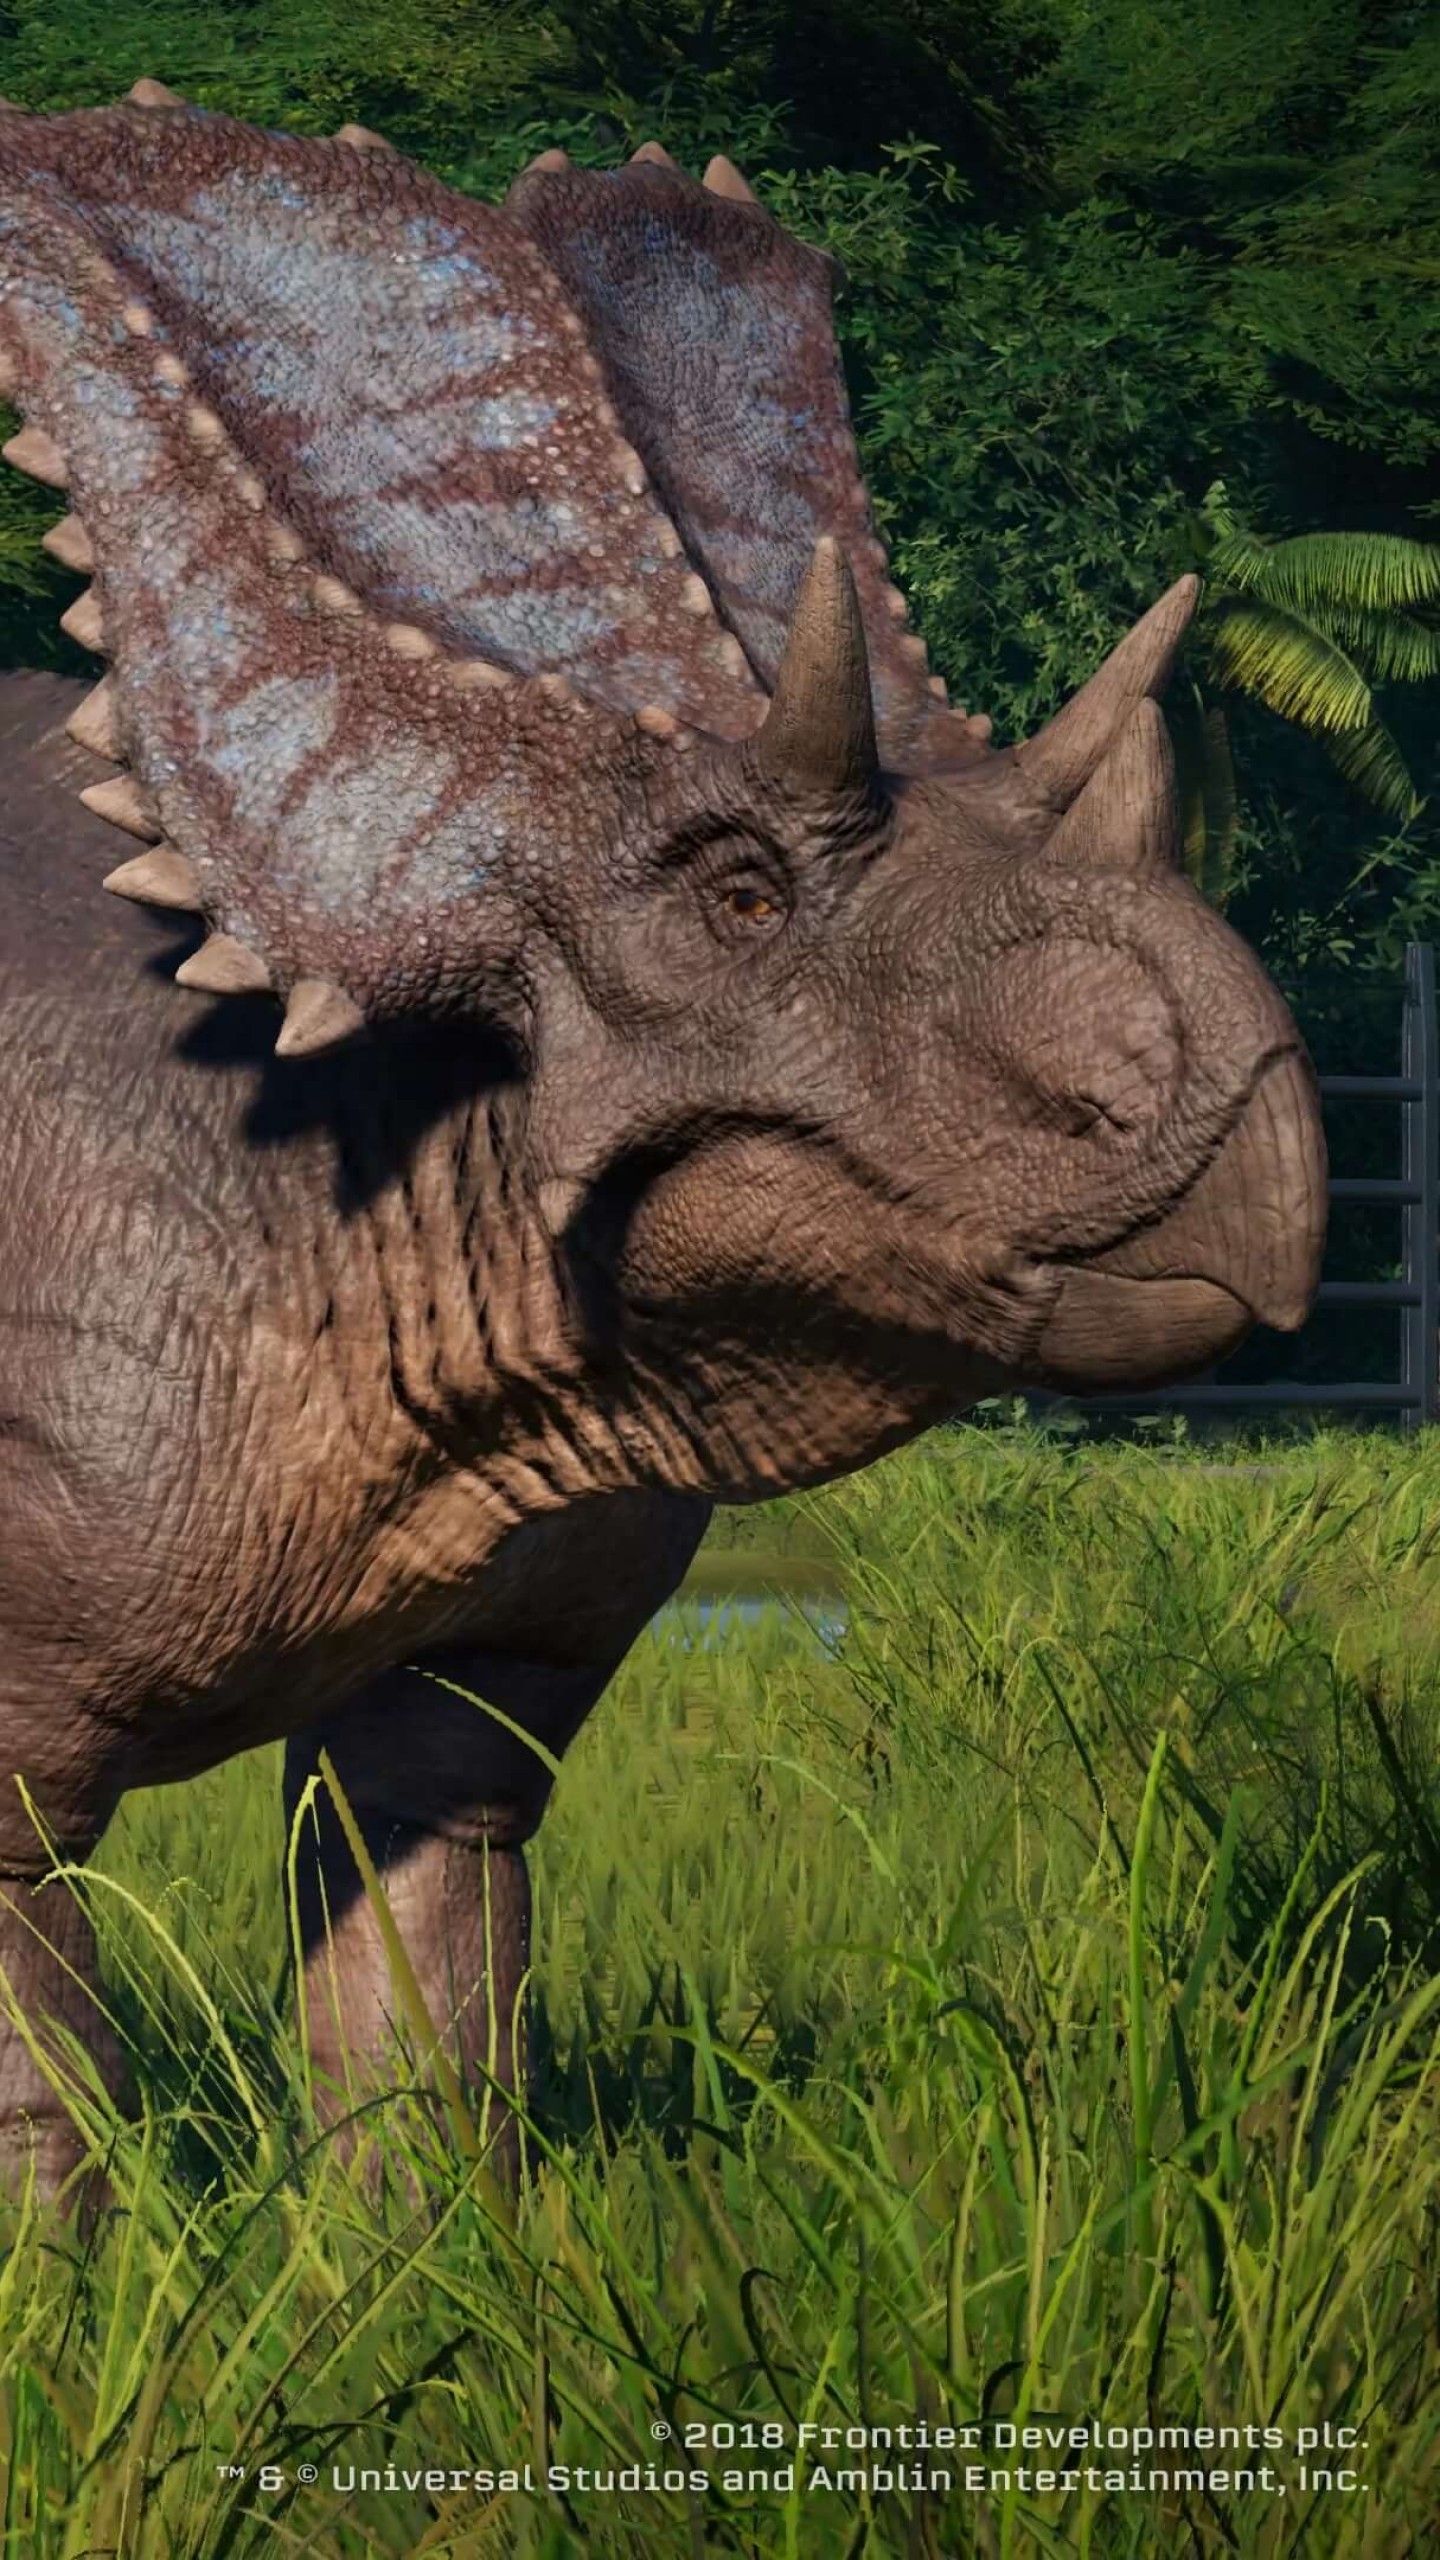 Wallpaper Jurassic World Evolution, screenshot, 4K, Games